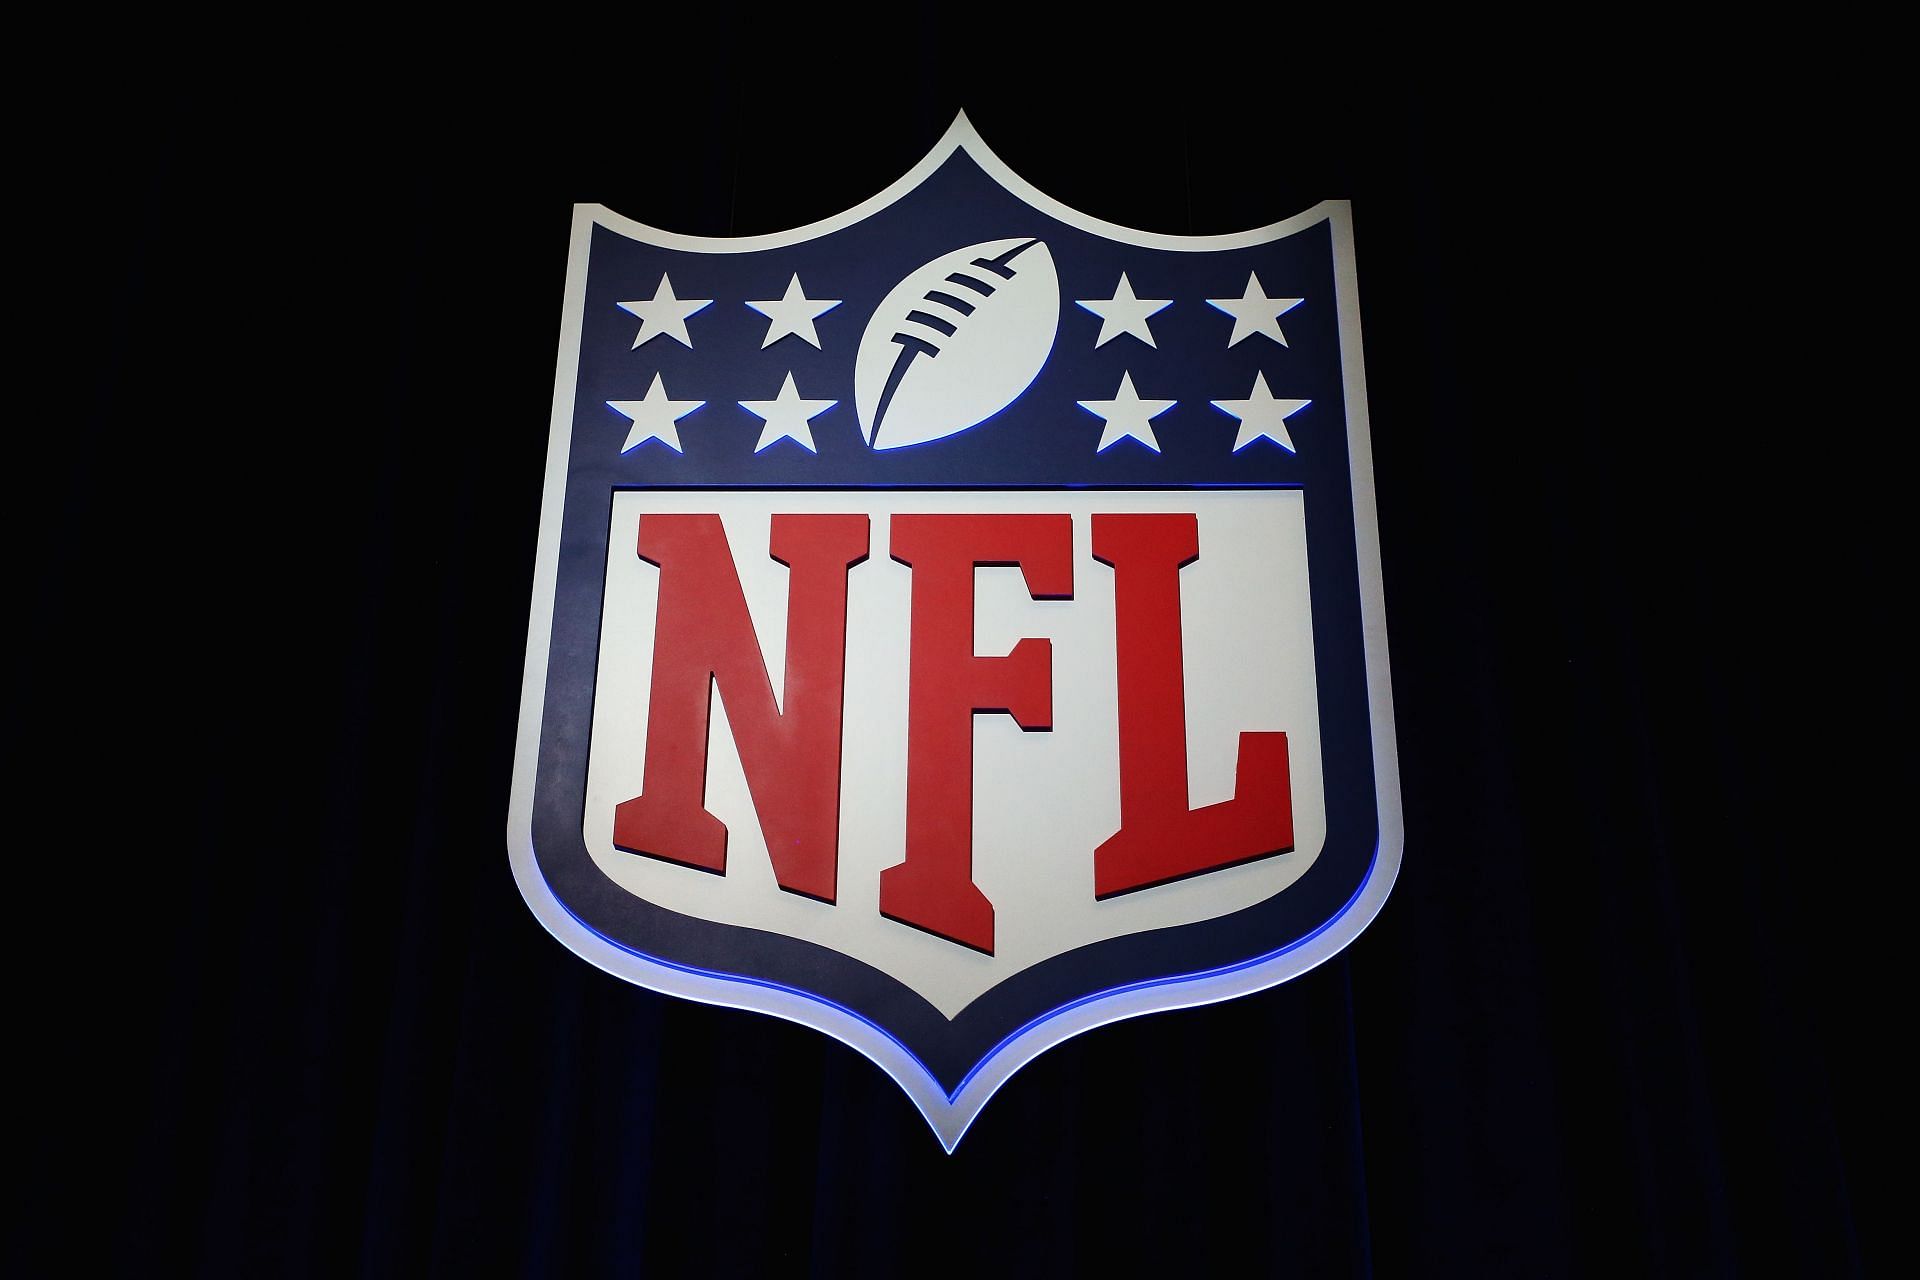 Permanent NFL official shield logo